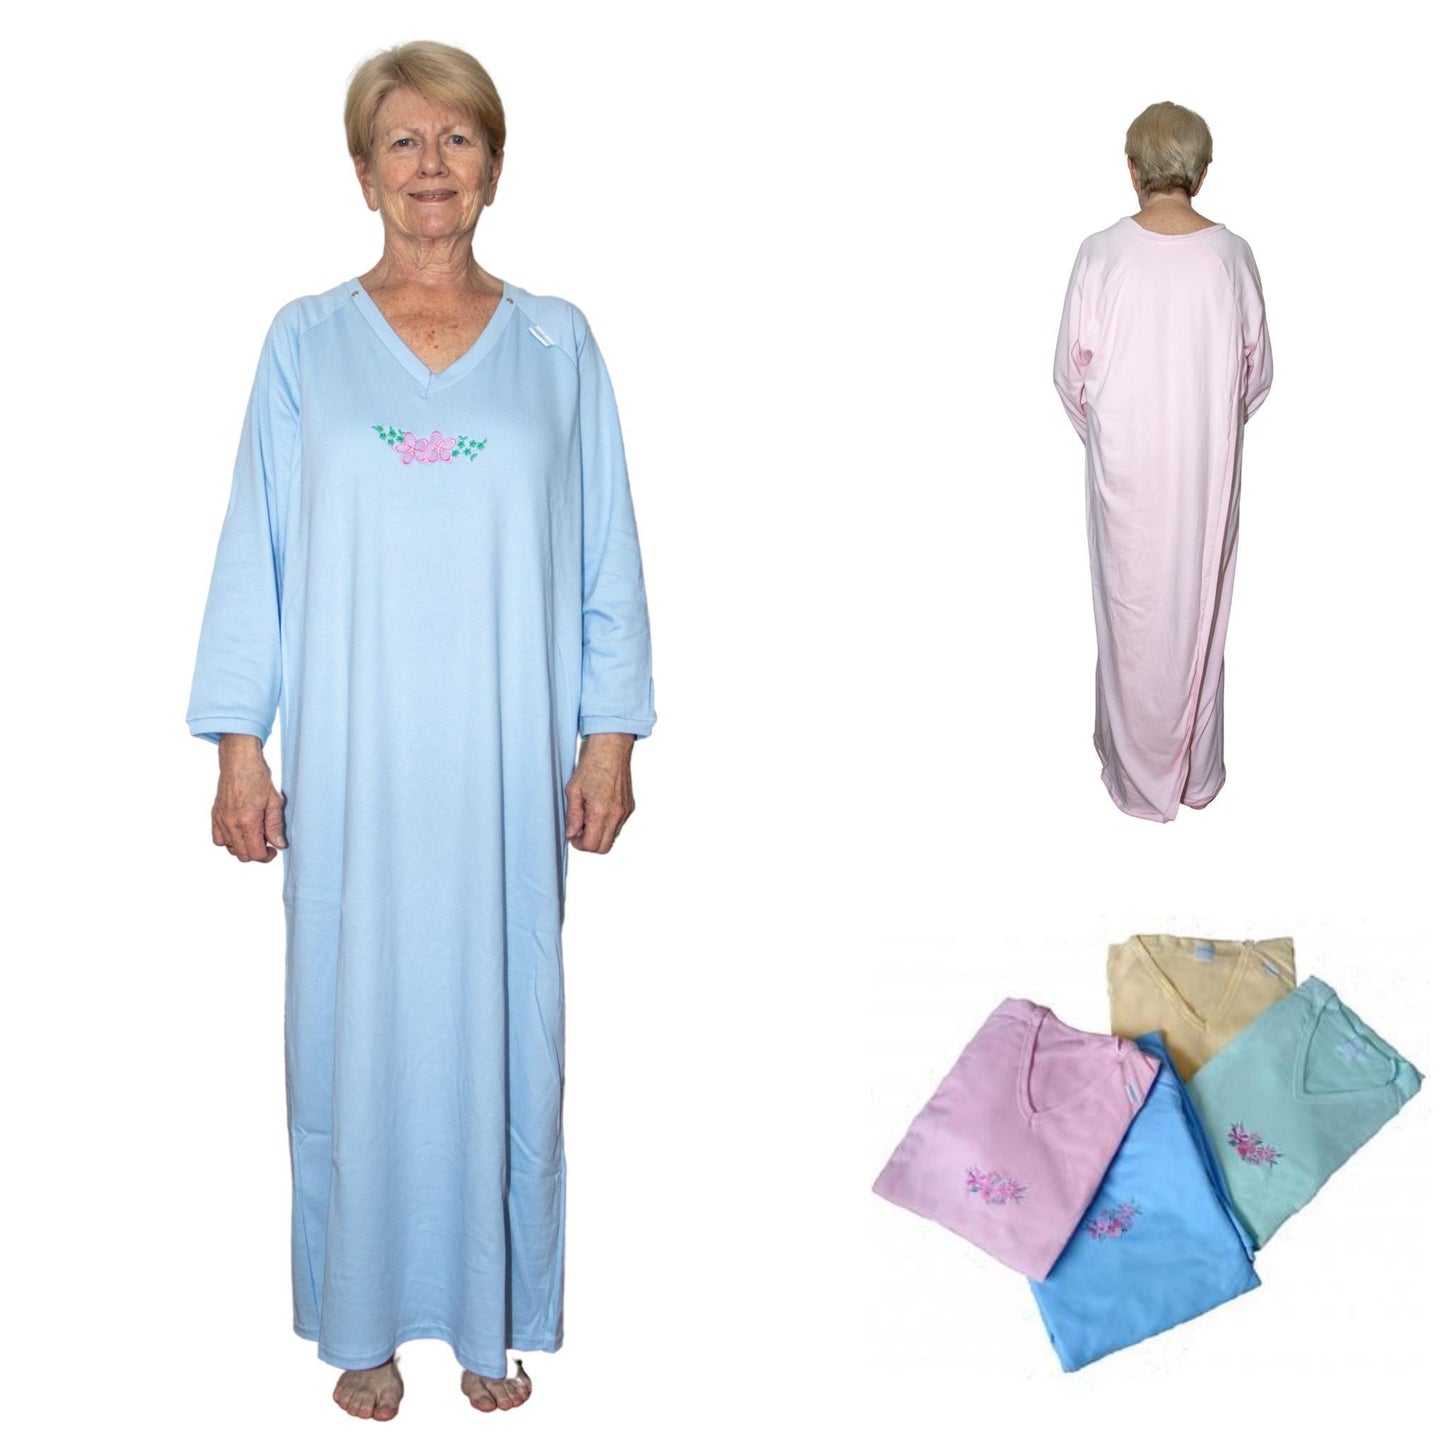 velcro pajamas for elderly